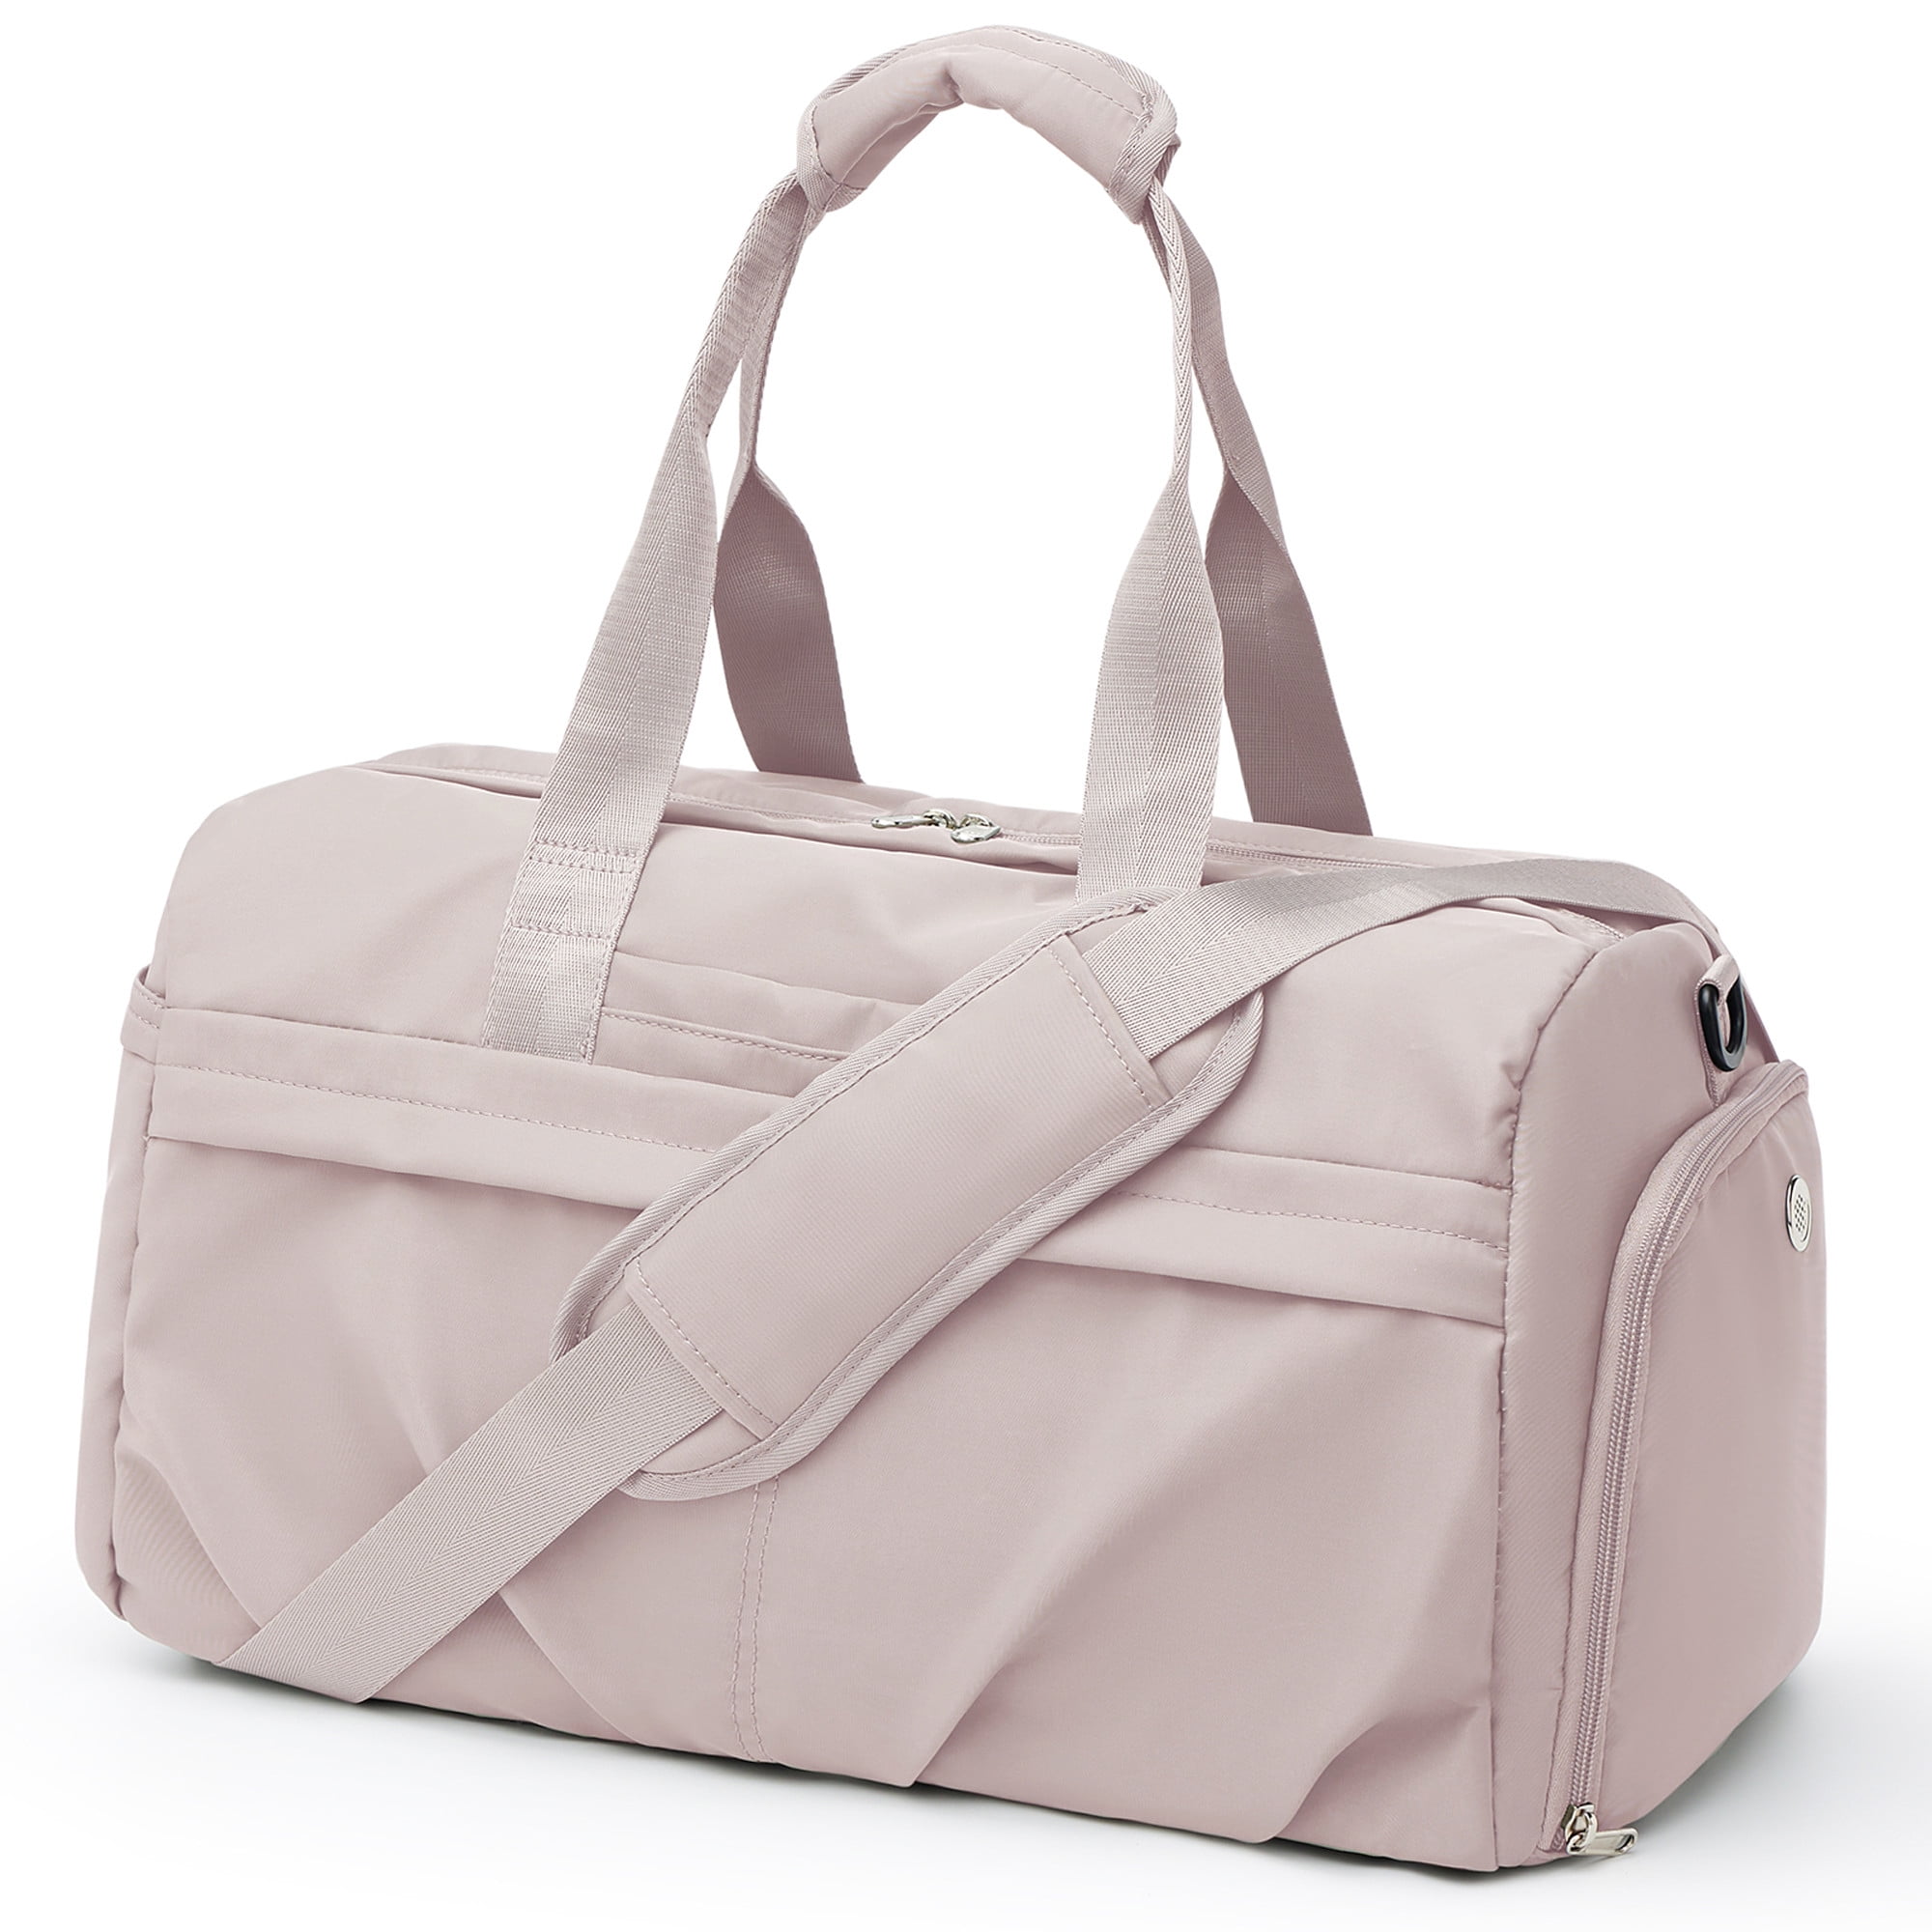 Shop FUEL Hot Pink Gym Bag Duffle Zipper Week – Luggage Factory